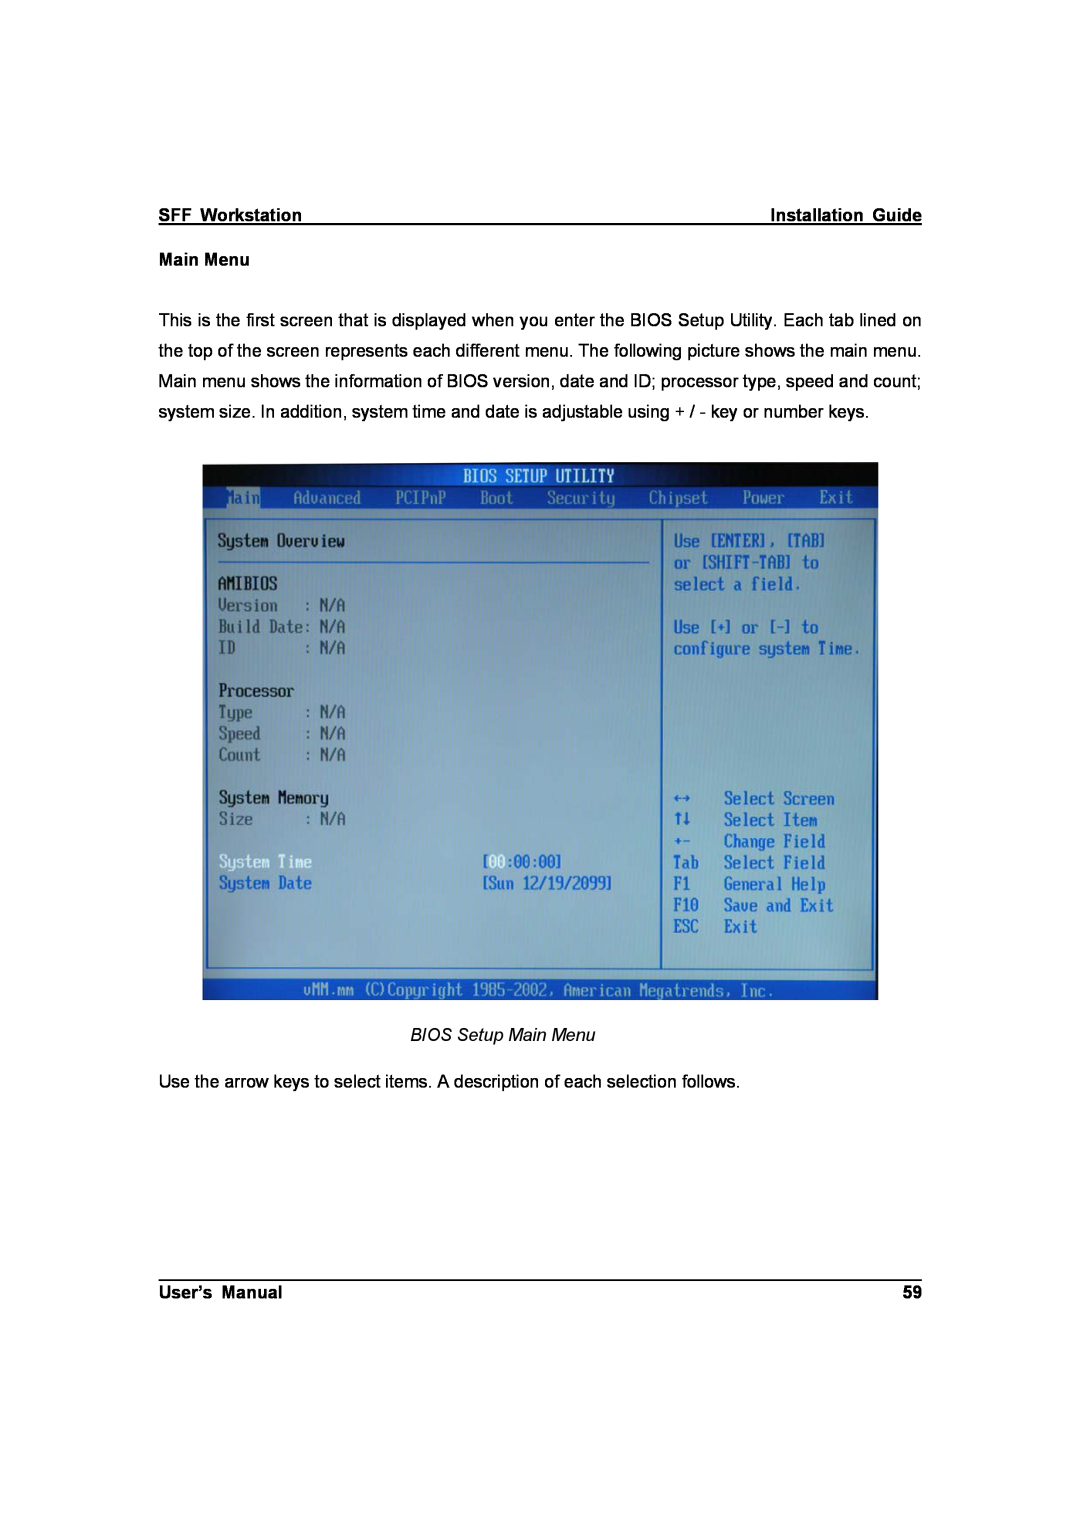 IBM ZMAXdp user manual SFF Workstation, BIOS Setup Main Menu, User’s Manual 